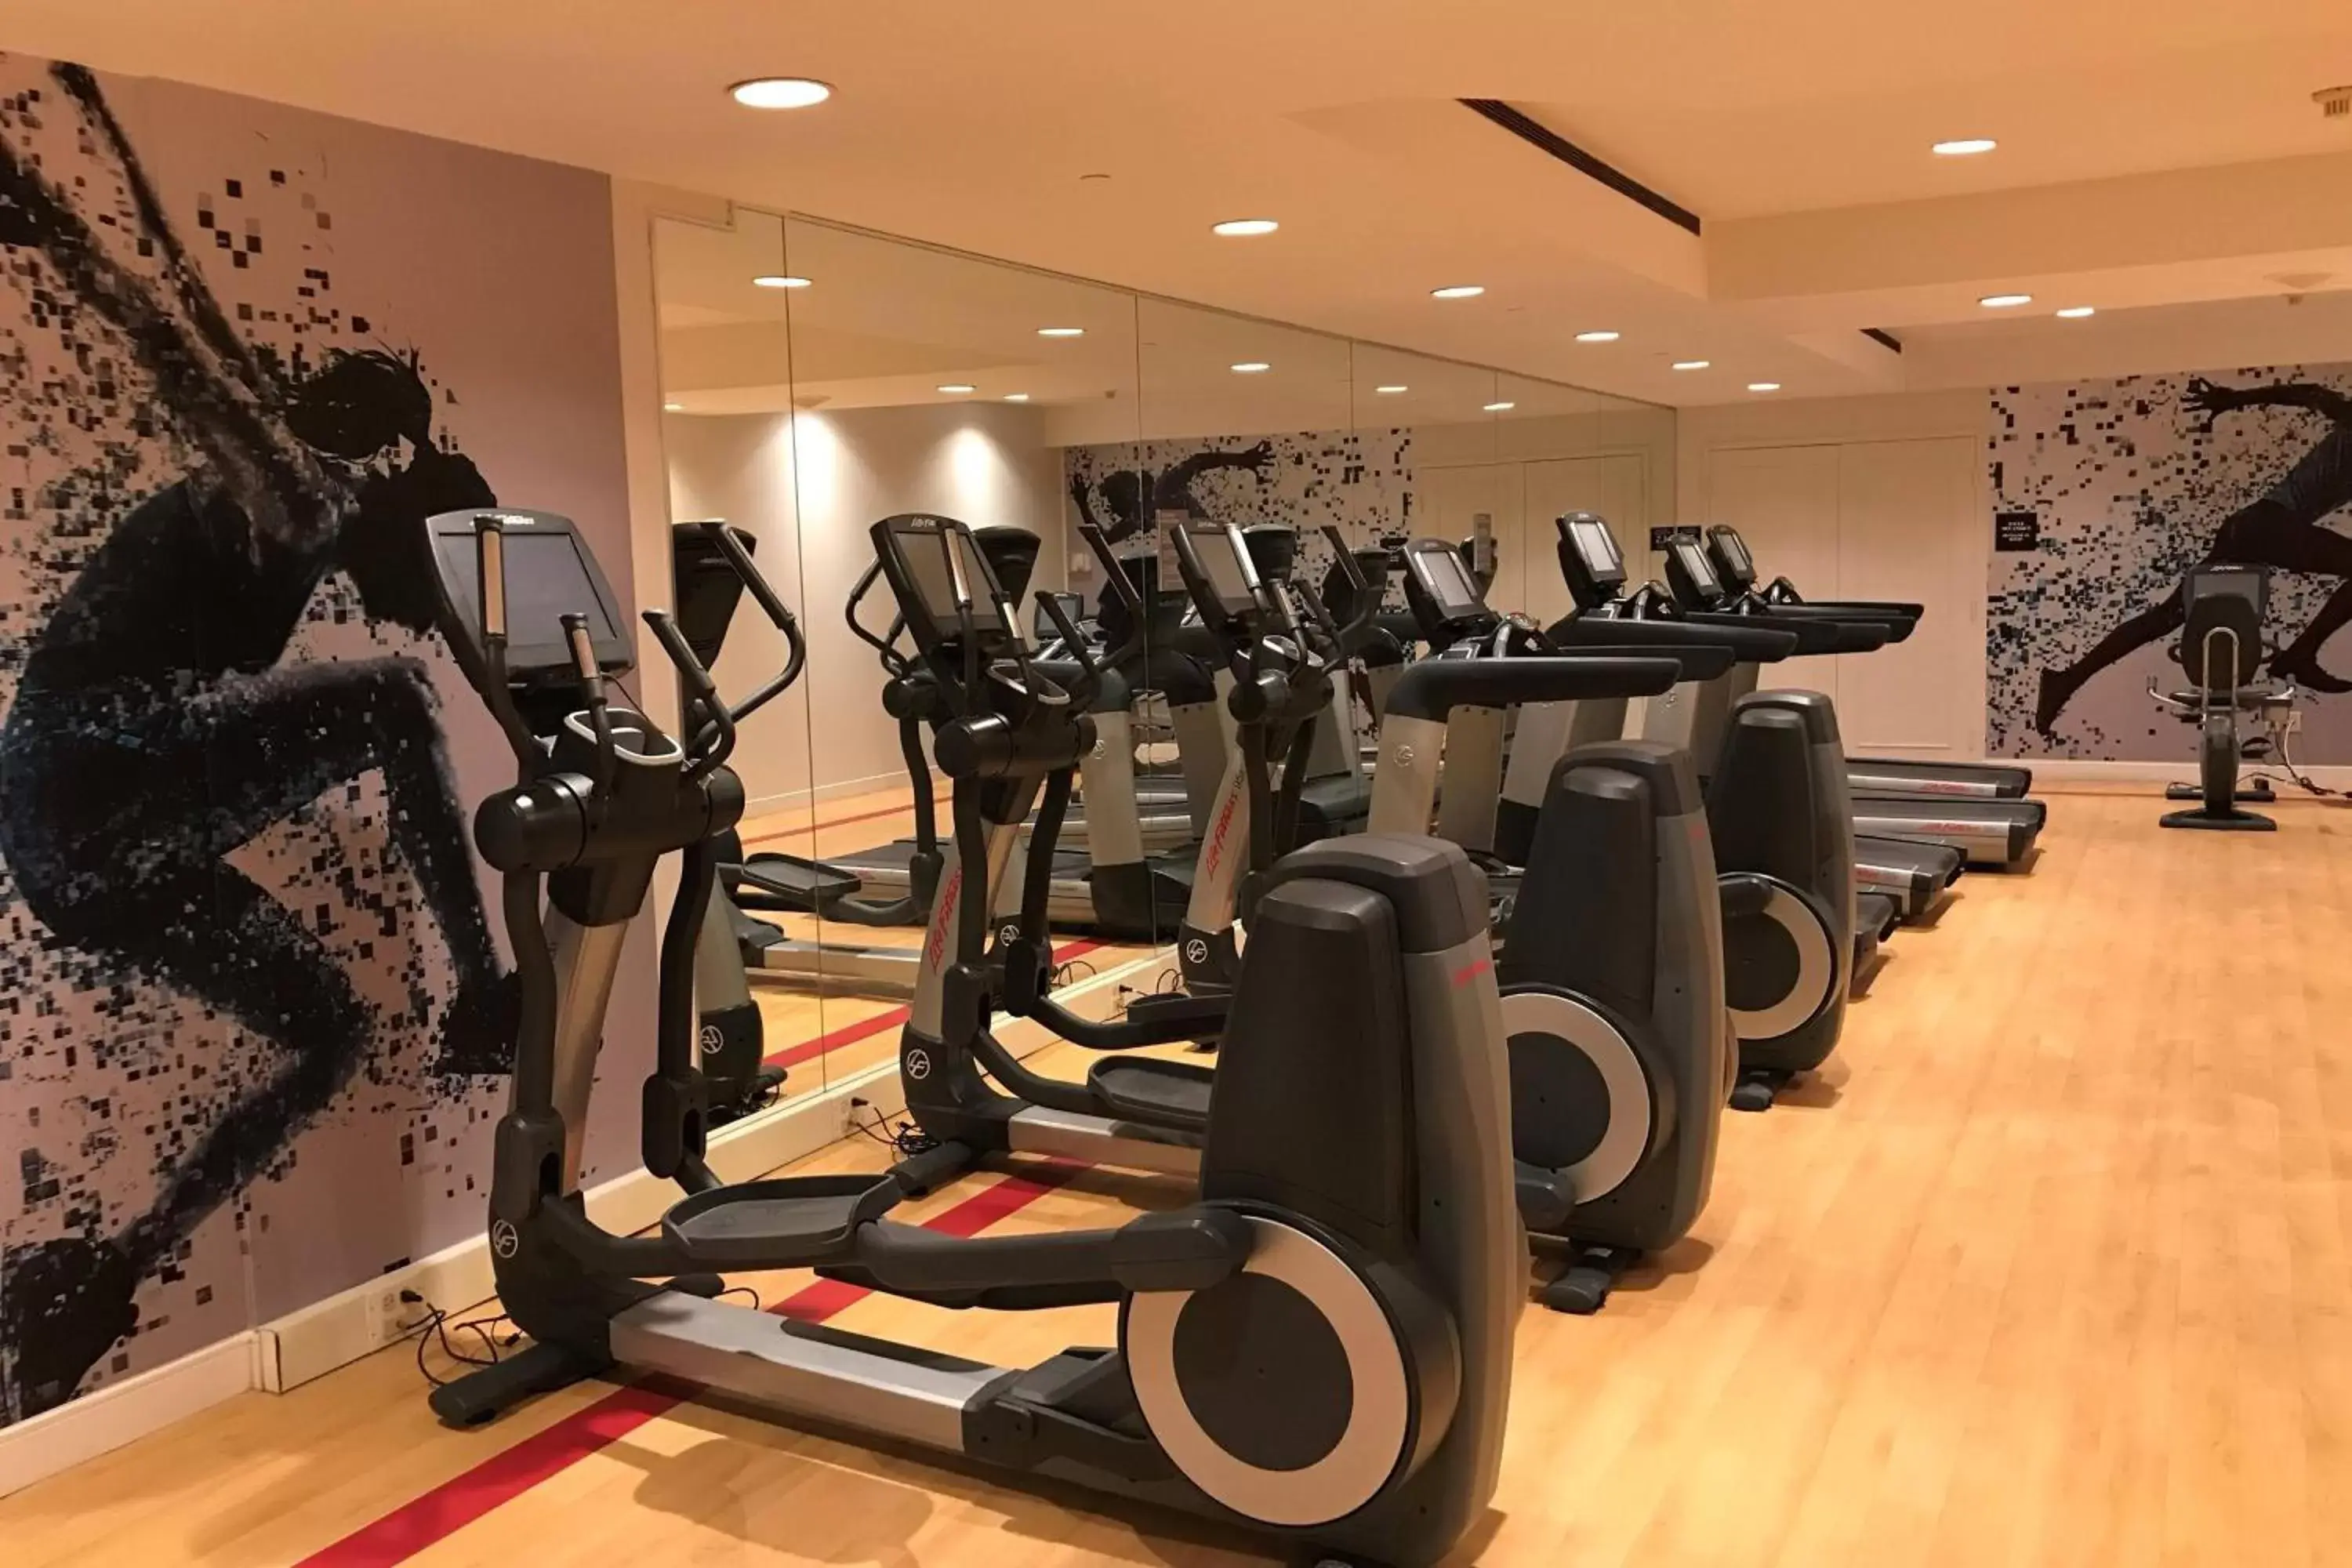 Fitness centre/facilities, Fitness Center/Facilities in Sheraton Laval Hotel